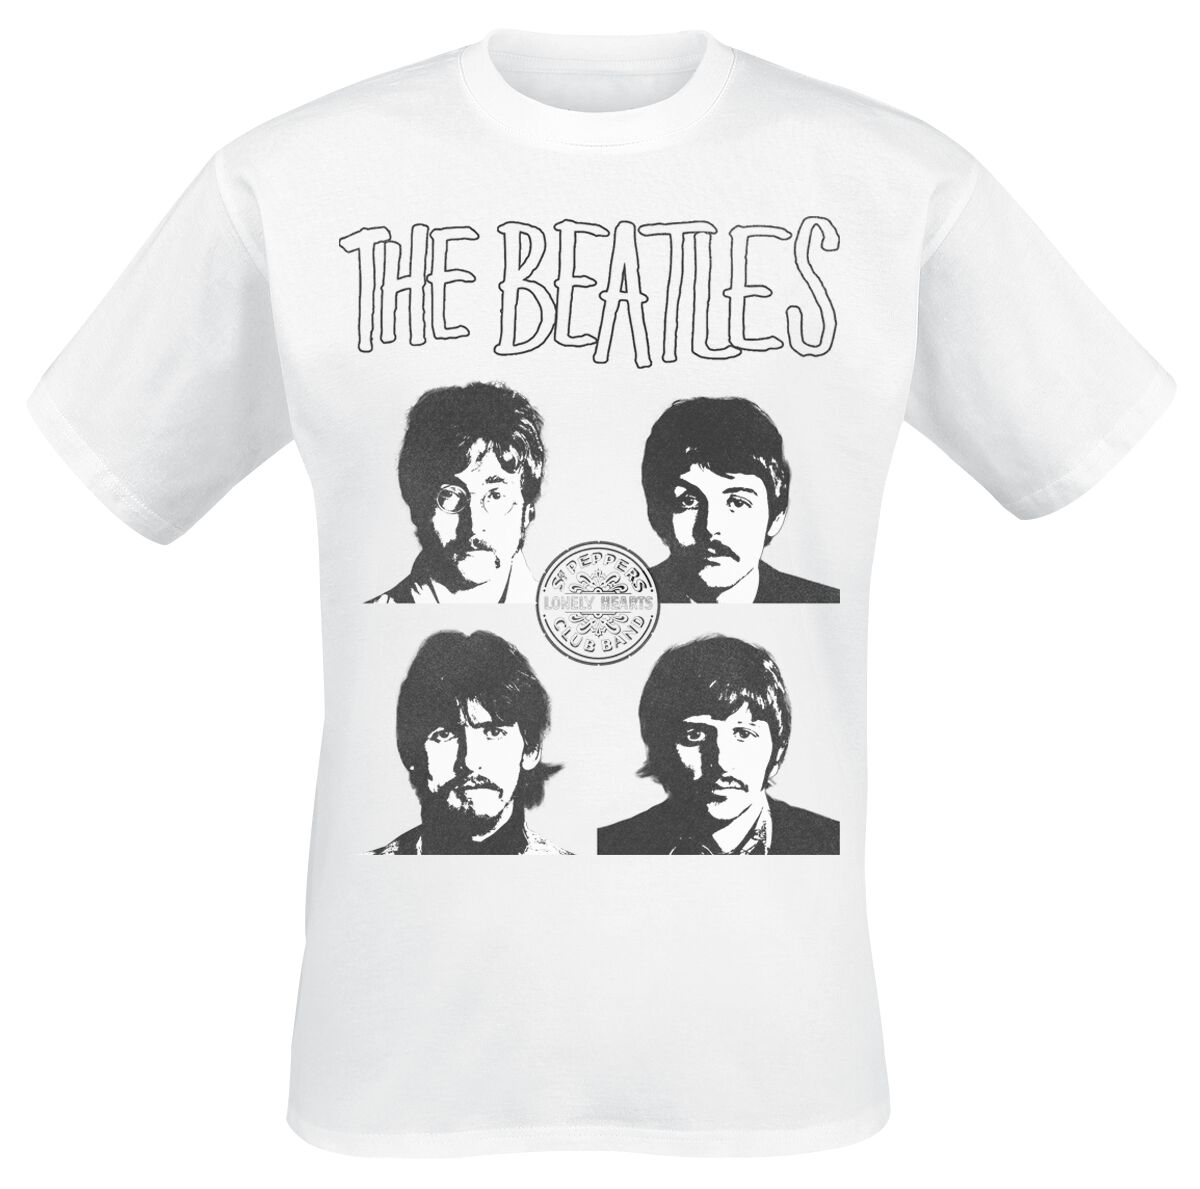 The Beatles T-Shirt - Sgt. Peppers Portrais - S bis 3XL - für Männer - Größe S - weiß  - Lizenziertes Merchandise!